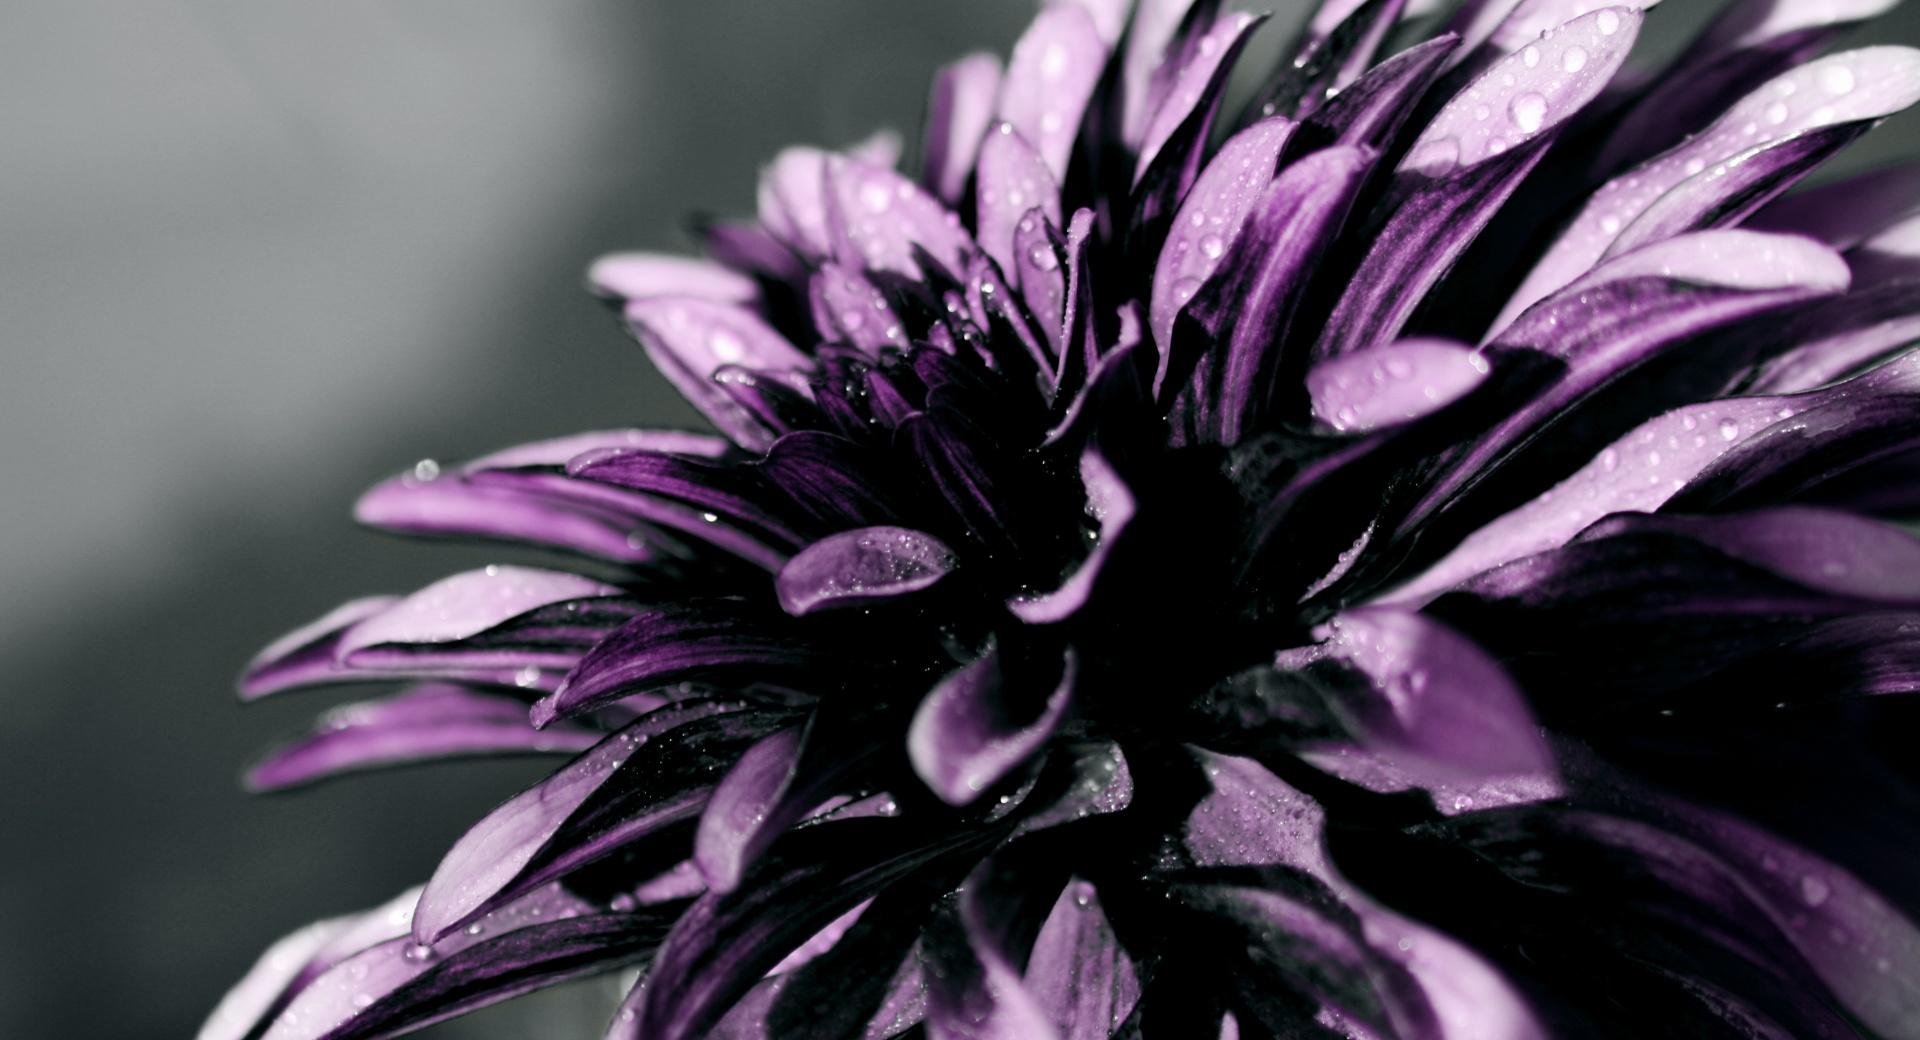 Purple Chrysanthemum Macro at 1024 x 768 size wallpapers HD quality